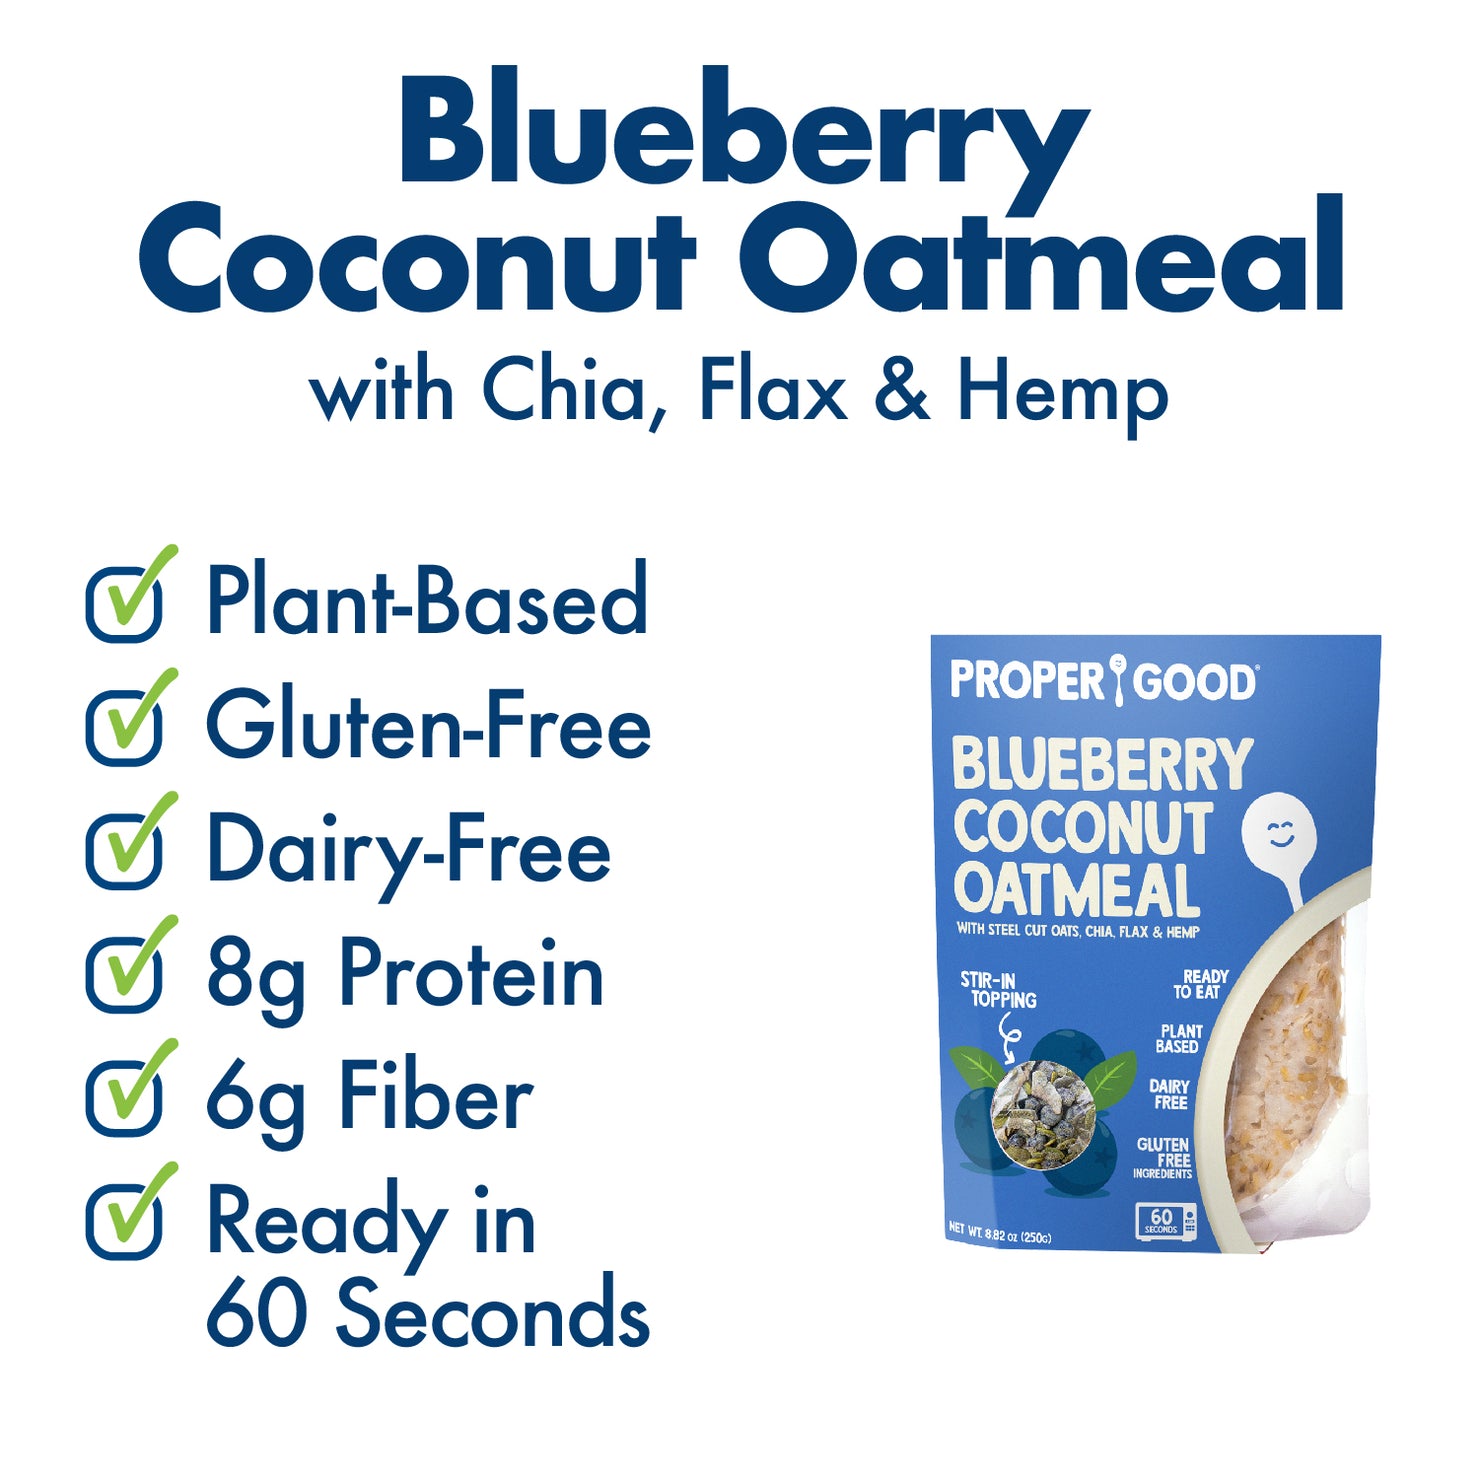 Blueberry & Coconut Oatmeal Benefits - Eat Proper Good